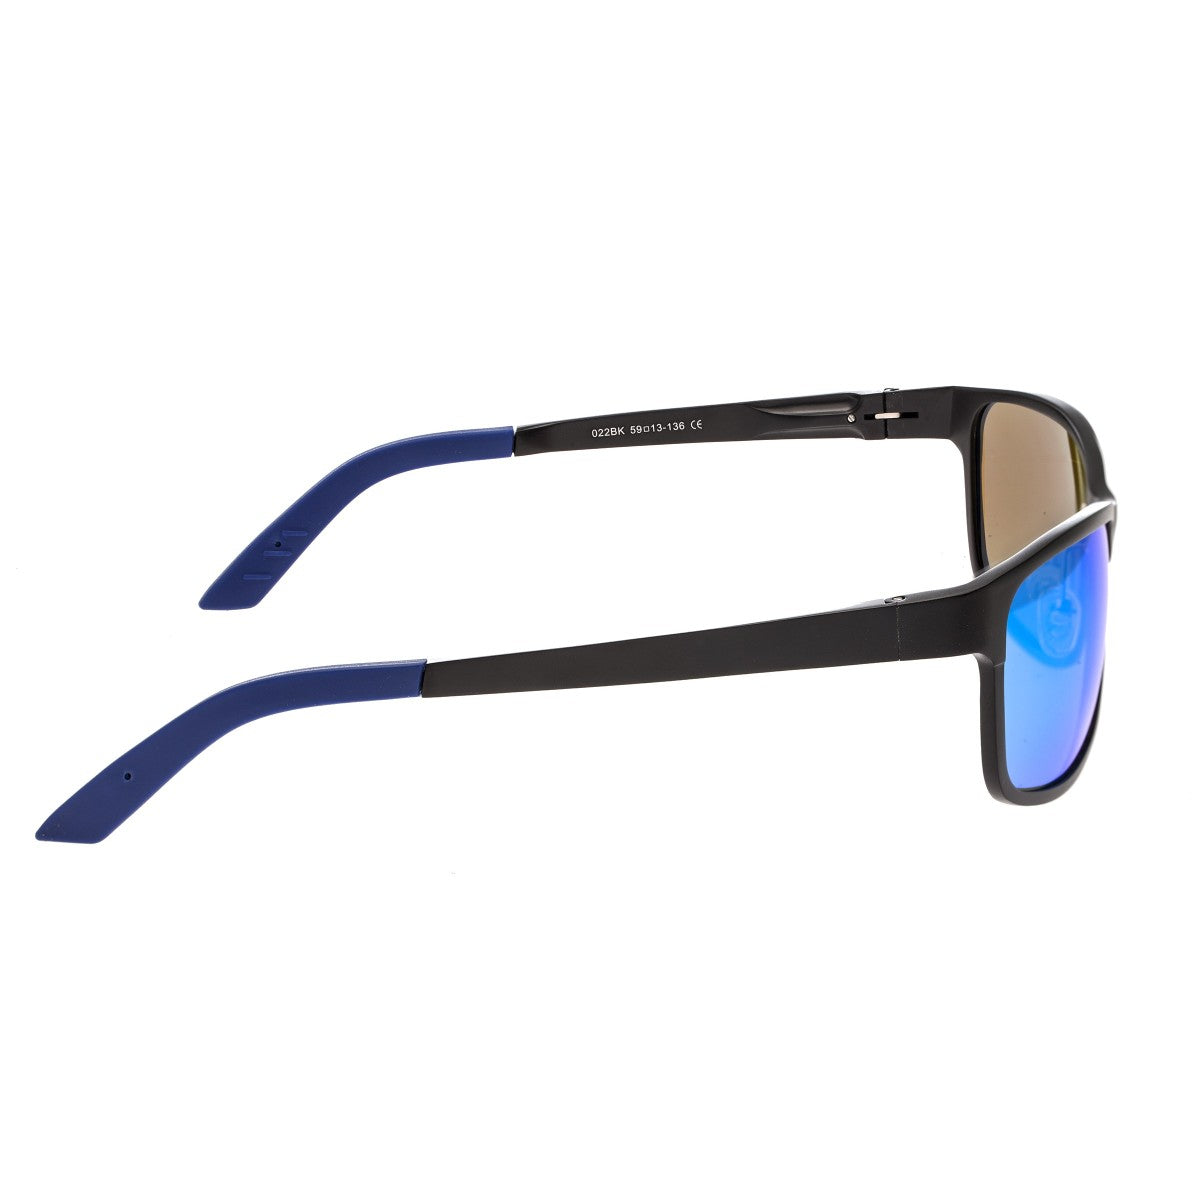 Breed Hydra Aluminium Polarized Sunglasses - Black/Blue - BSG022BK